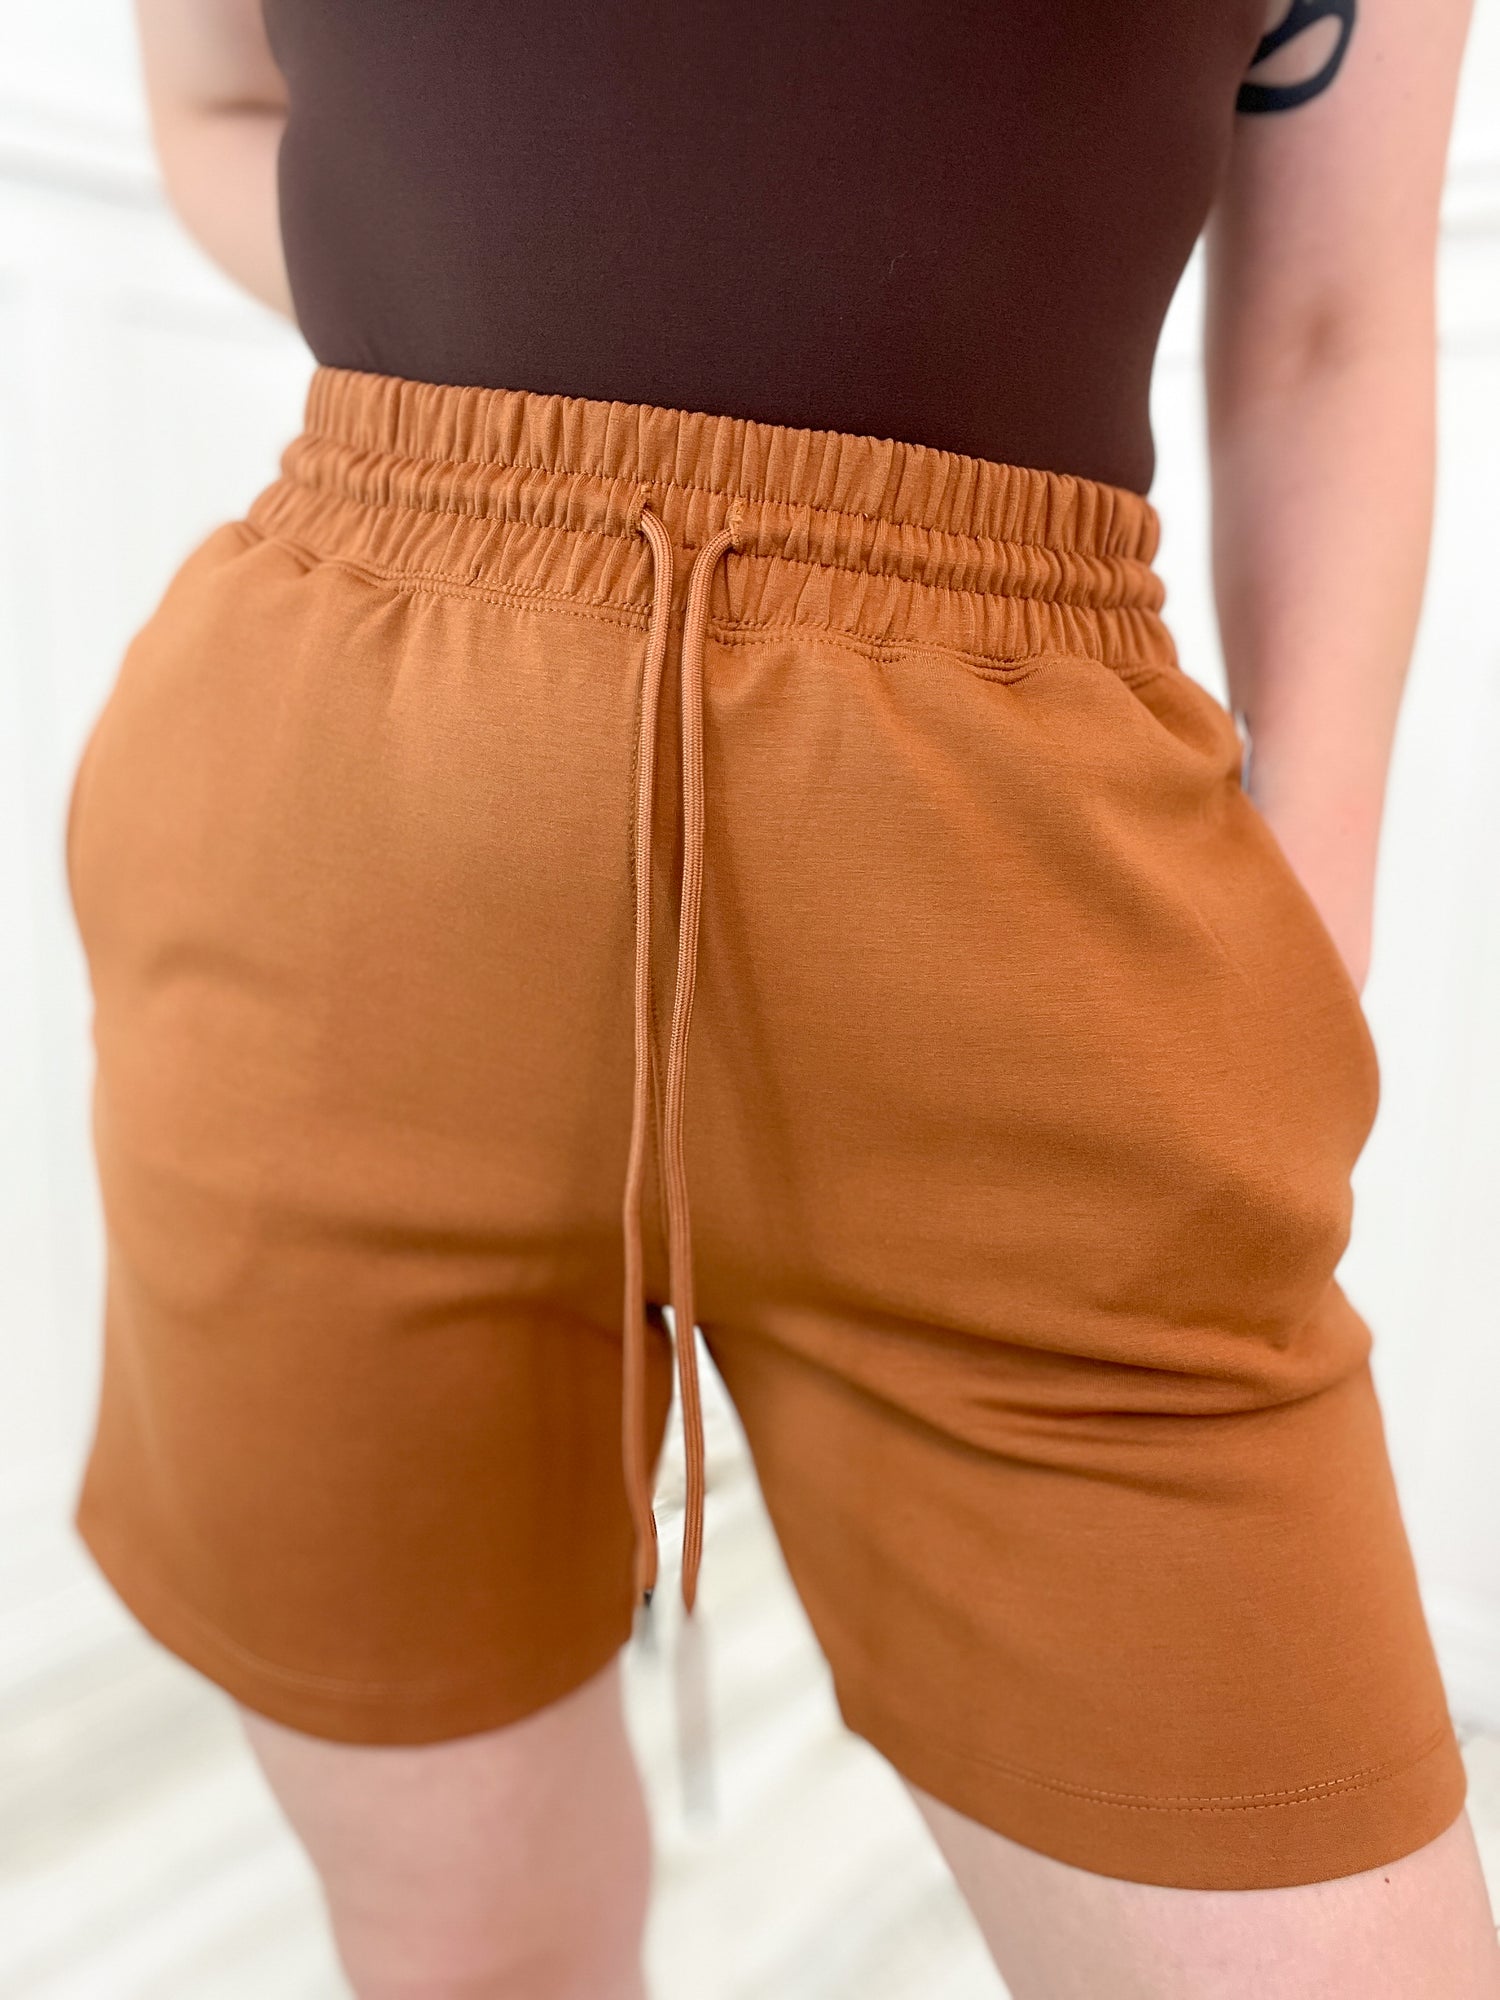 Ponti Shorts with Pockets